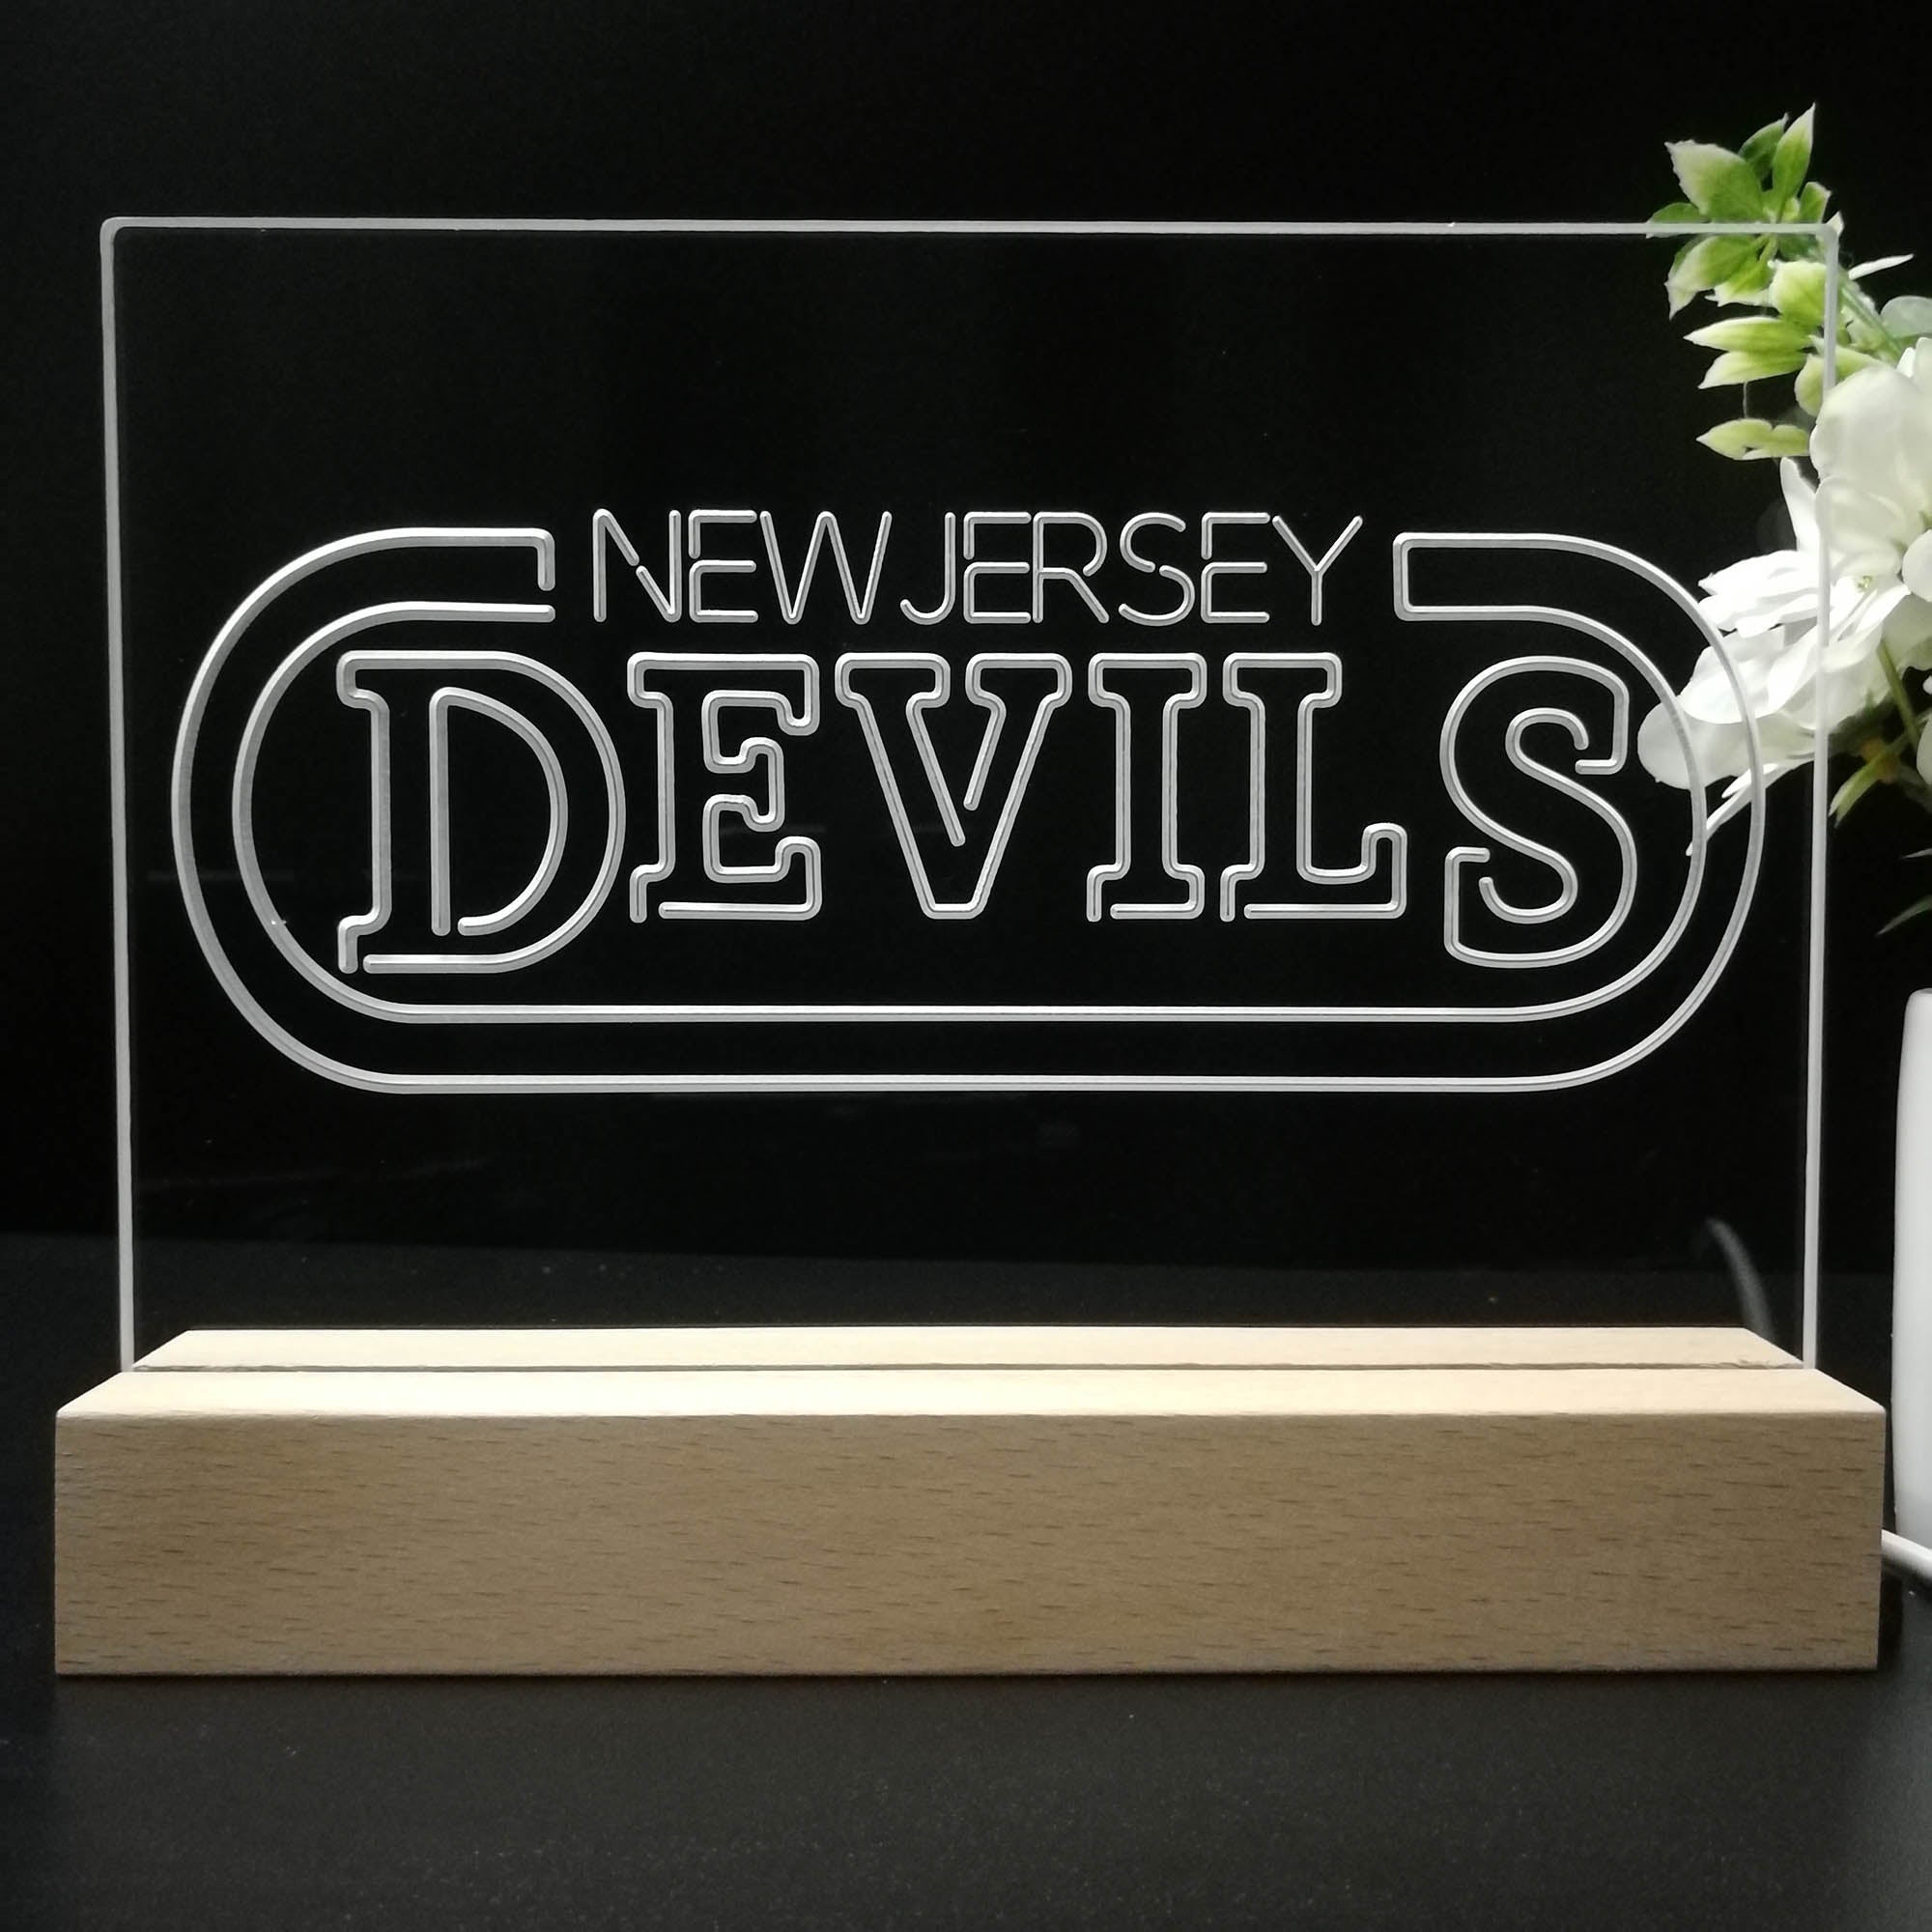 New Jersey Sport Team Devils Sport Team Night Lamp 3D Illusion Lamp